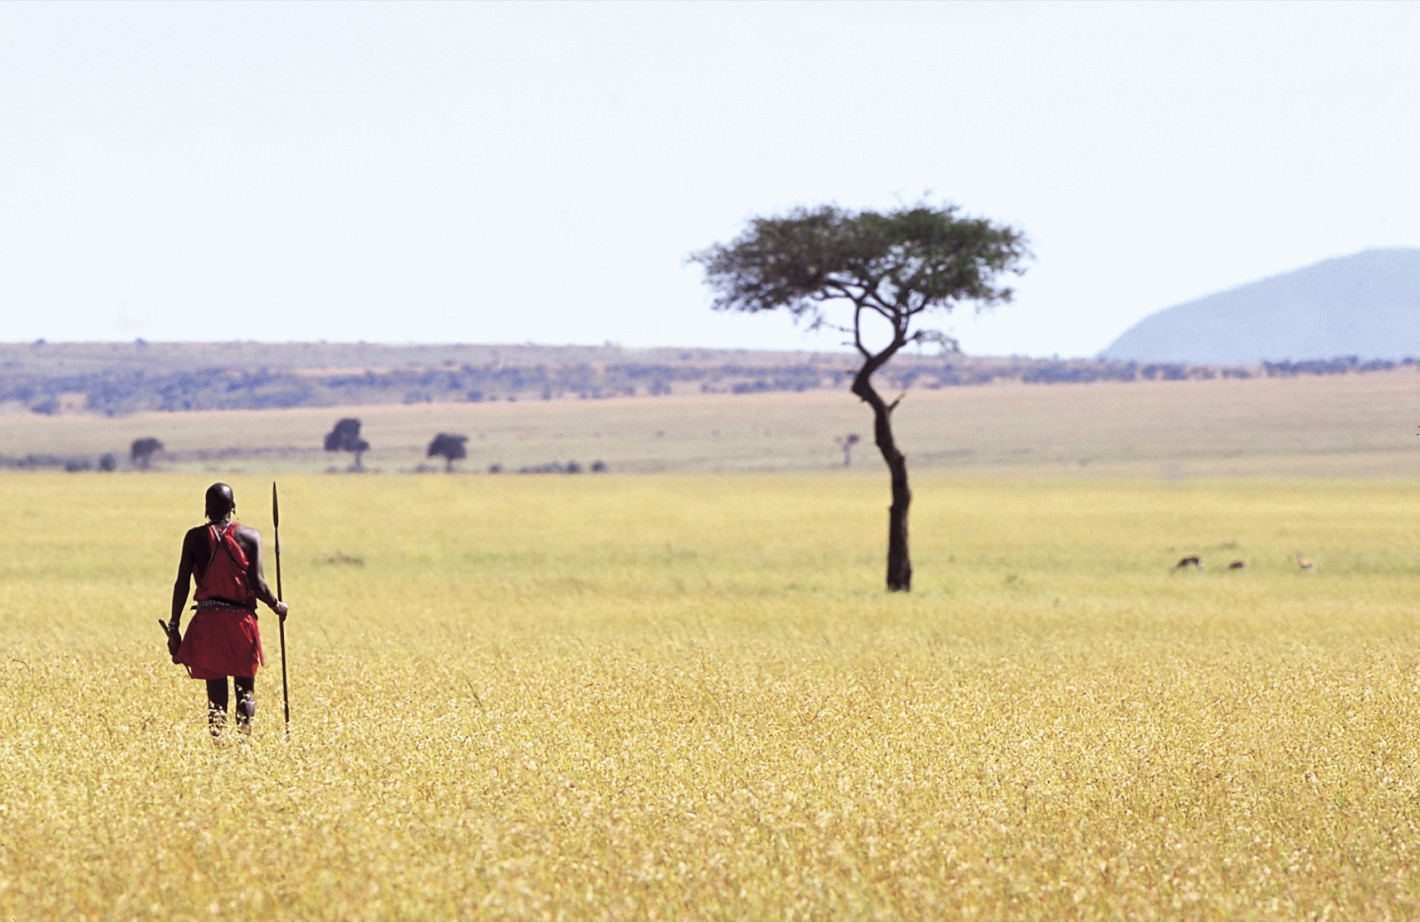 Maasai warrior walking in a field